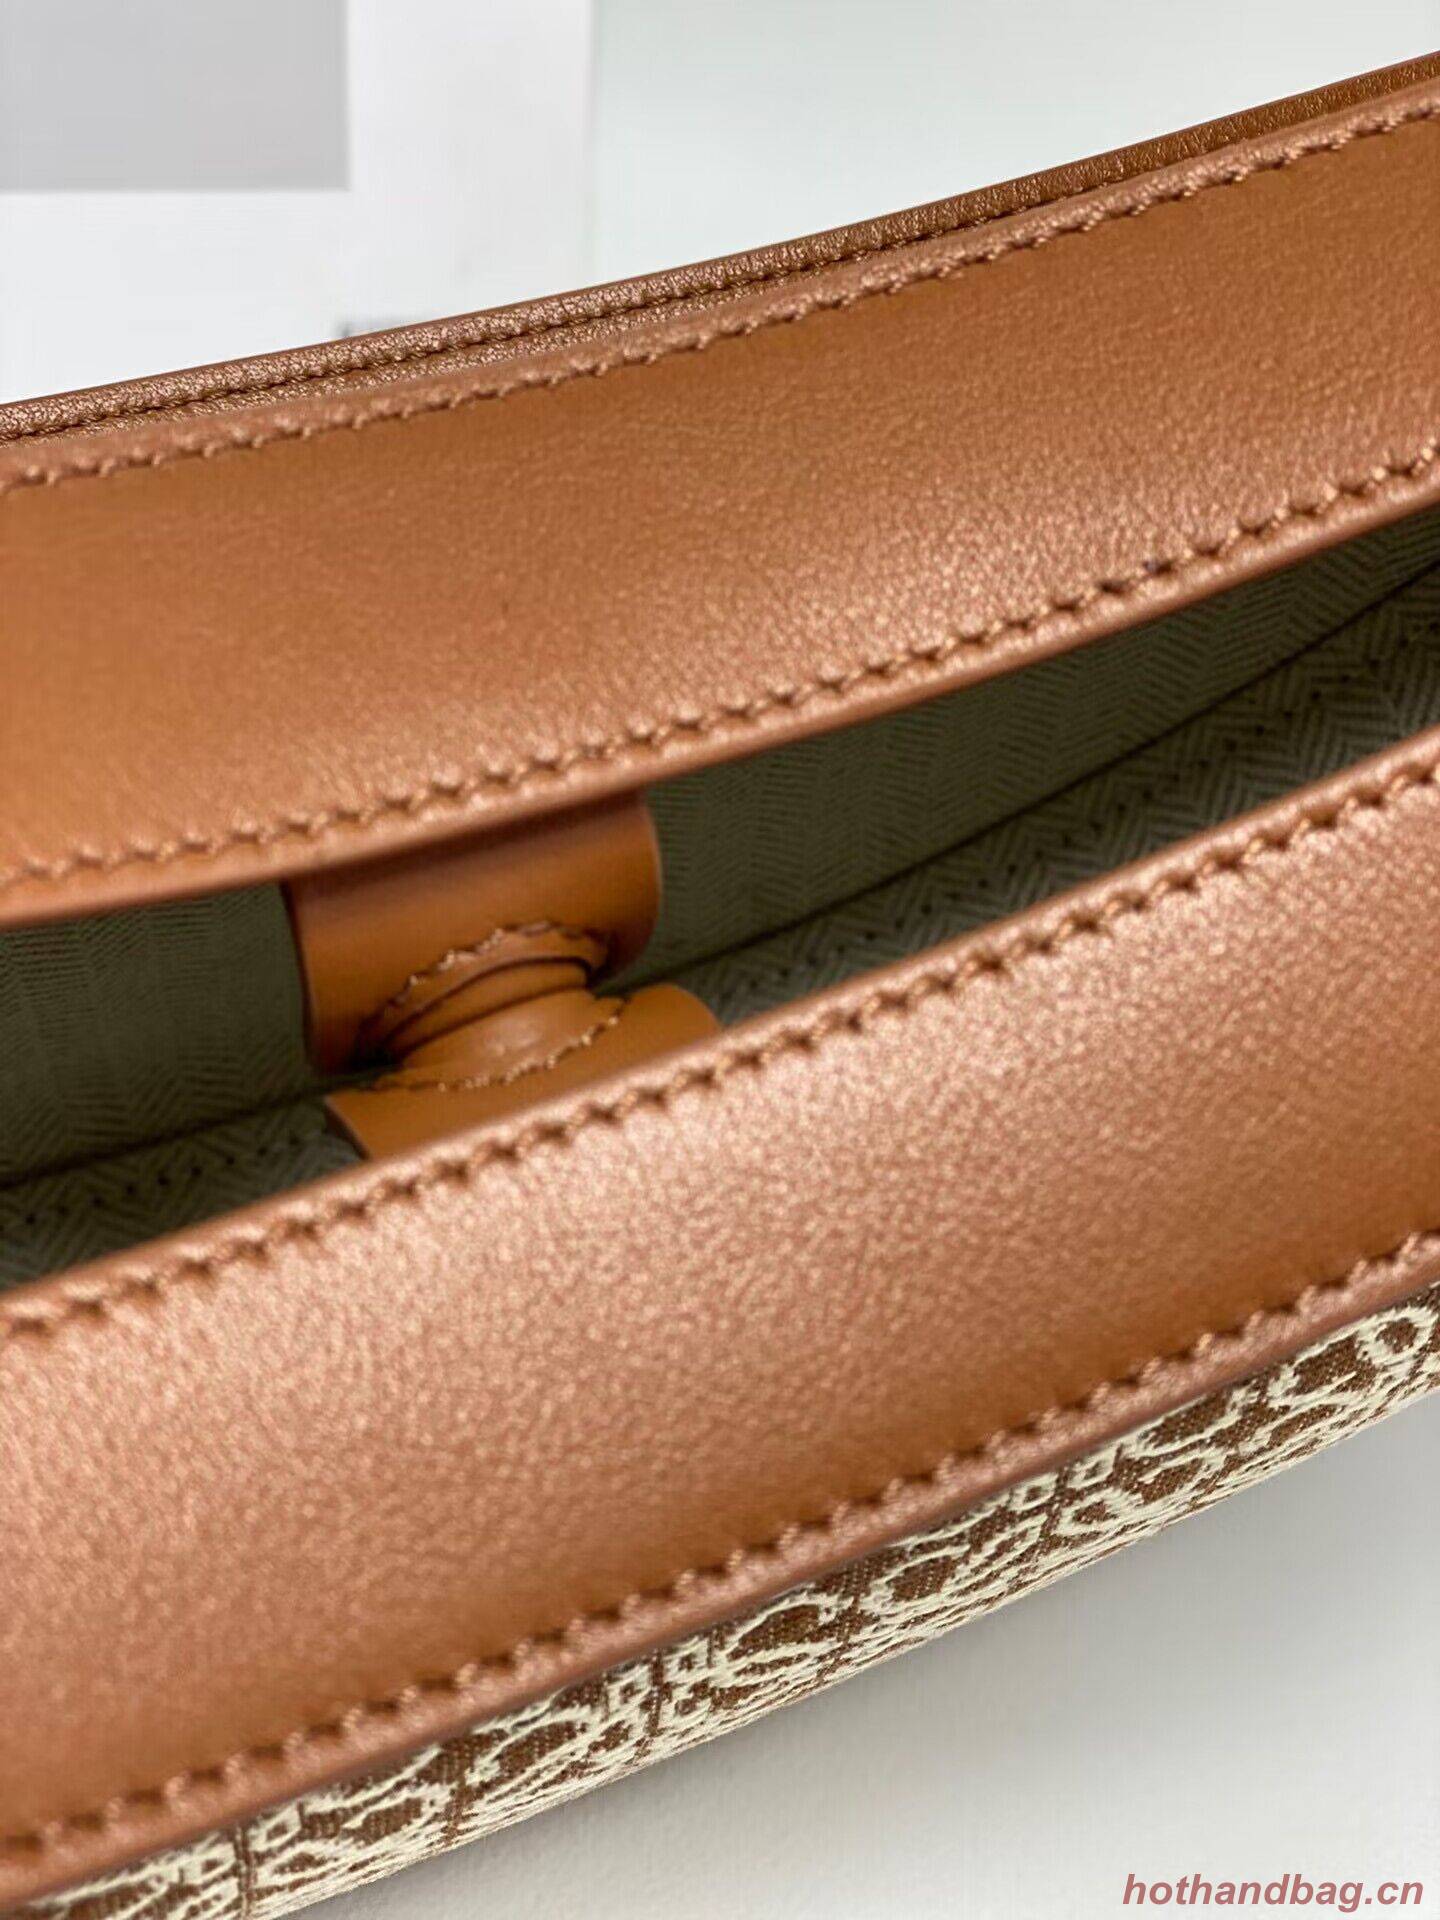 Loewe Original Leather Shoulder Handbag 3073 Brown Embroidery